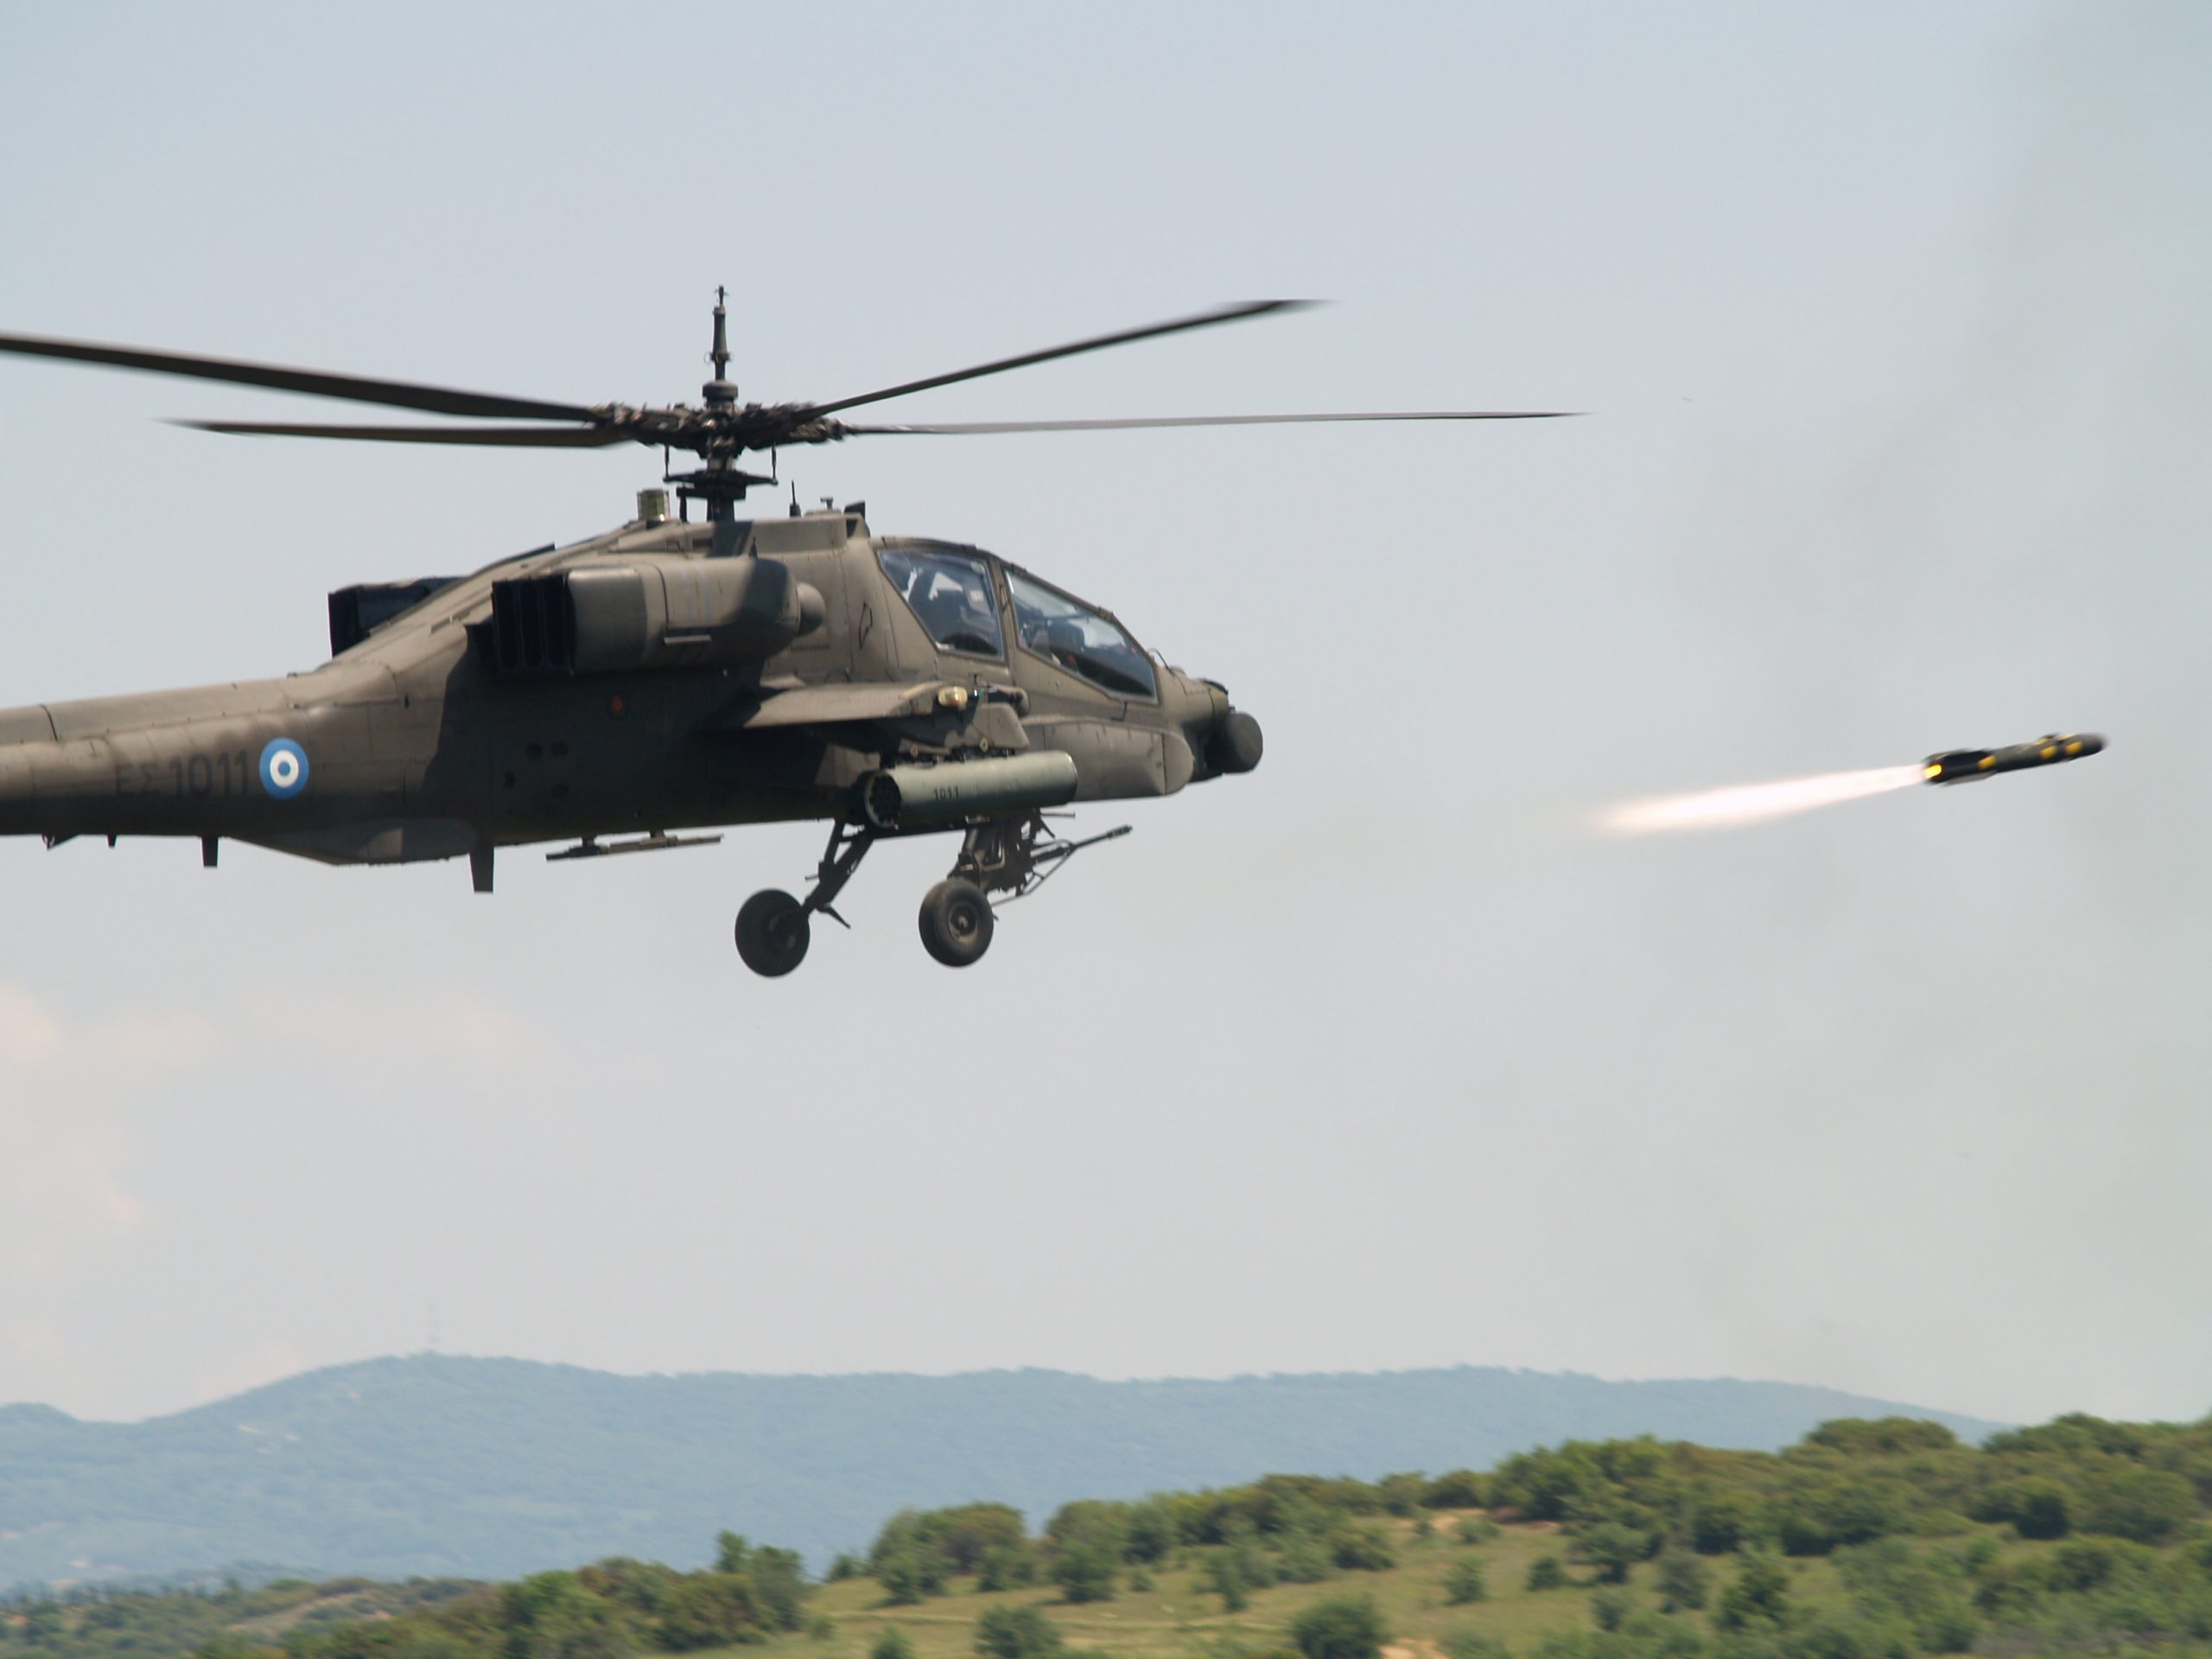 AGM-114 Ηellfire: Ο πύραυλος που «ψηφίζουν» τα ΑΗ-64Α Apache της Αεροπορίας Στρατού (φωτό, βίντεο)